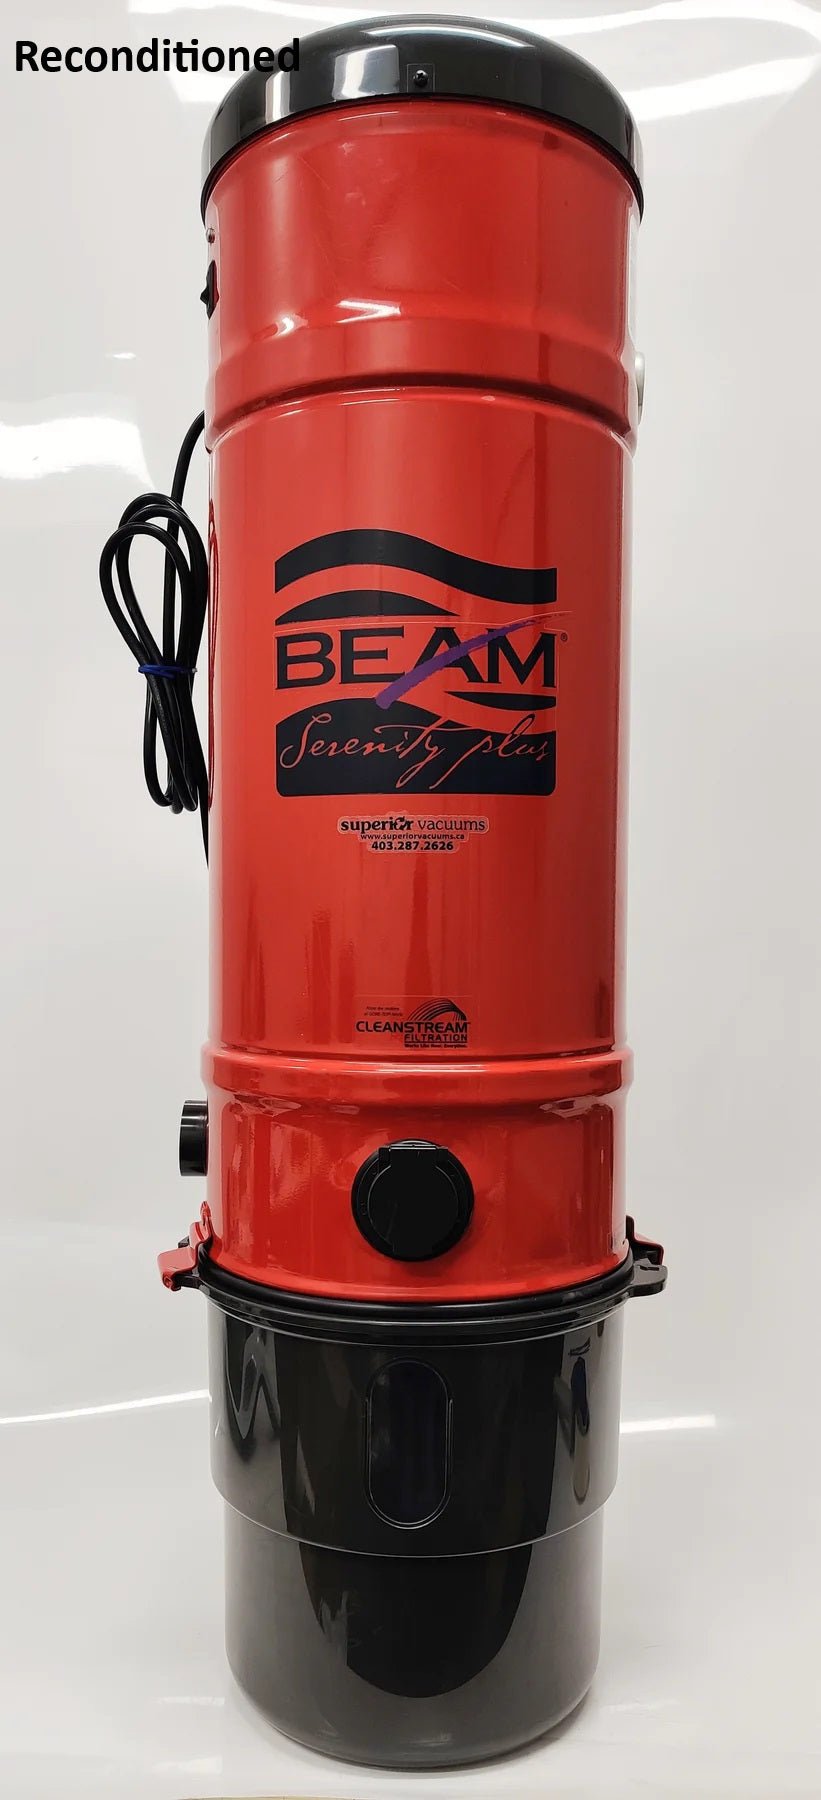 Powerful Beam Classic Central Vacuum with 550 Air Watt Motor